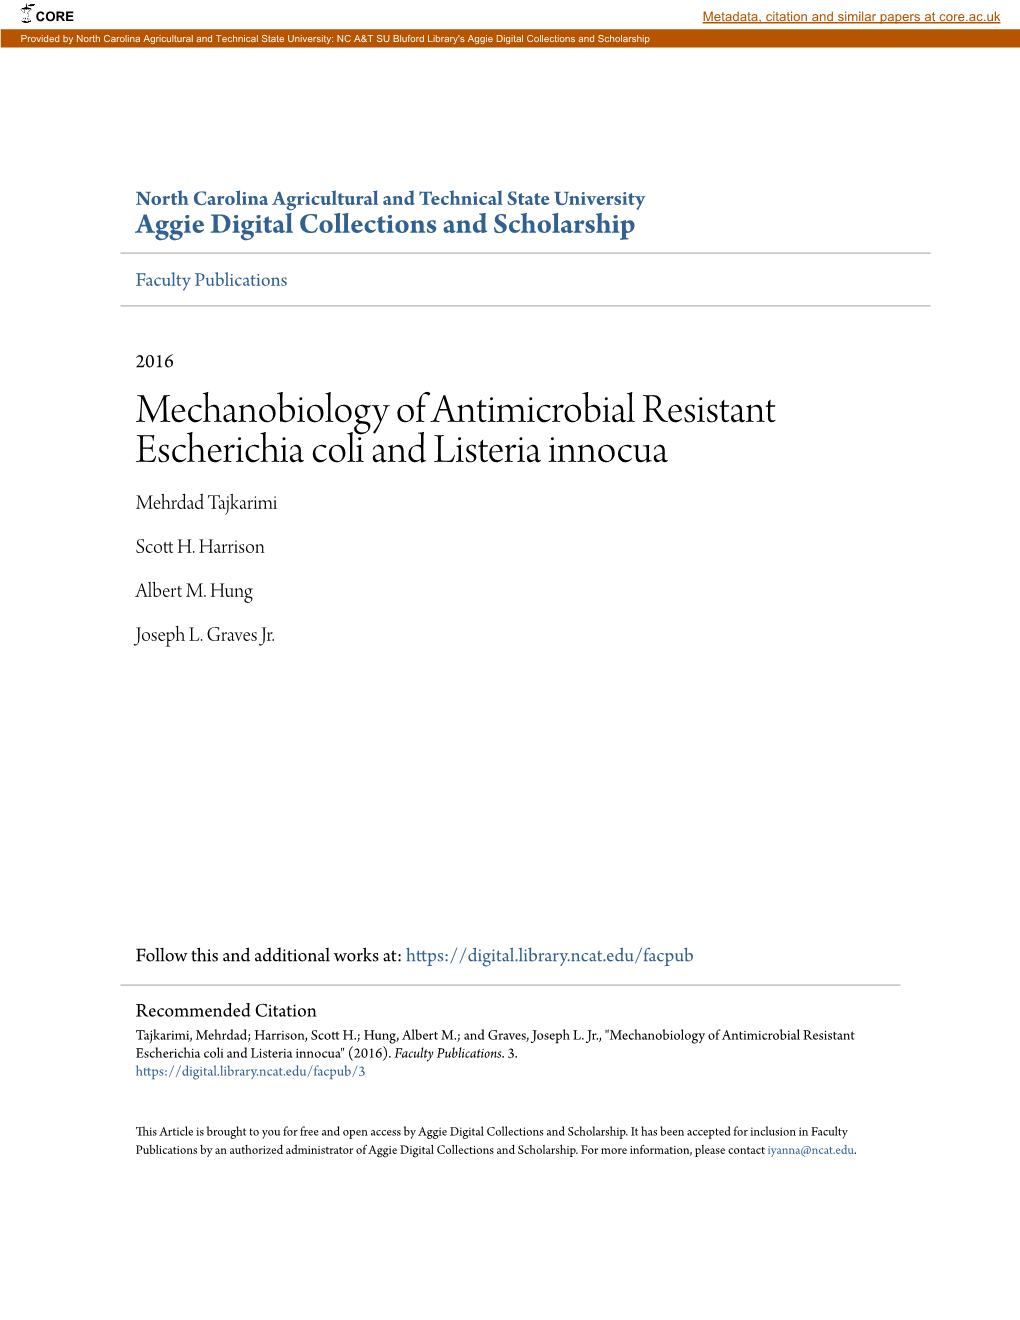 Mechanobiology of Antimicrobial Resistant Escherichia Coli and Listeria Innocua Mehrdad Tajkarimi